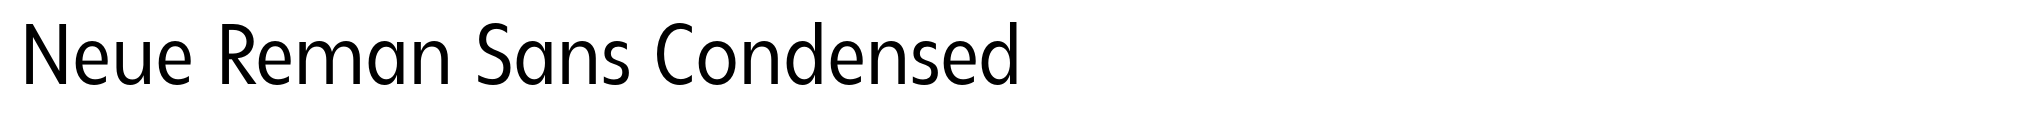 Neue Reman Sans Condensed image